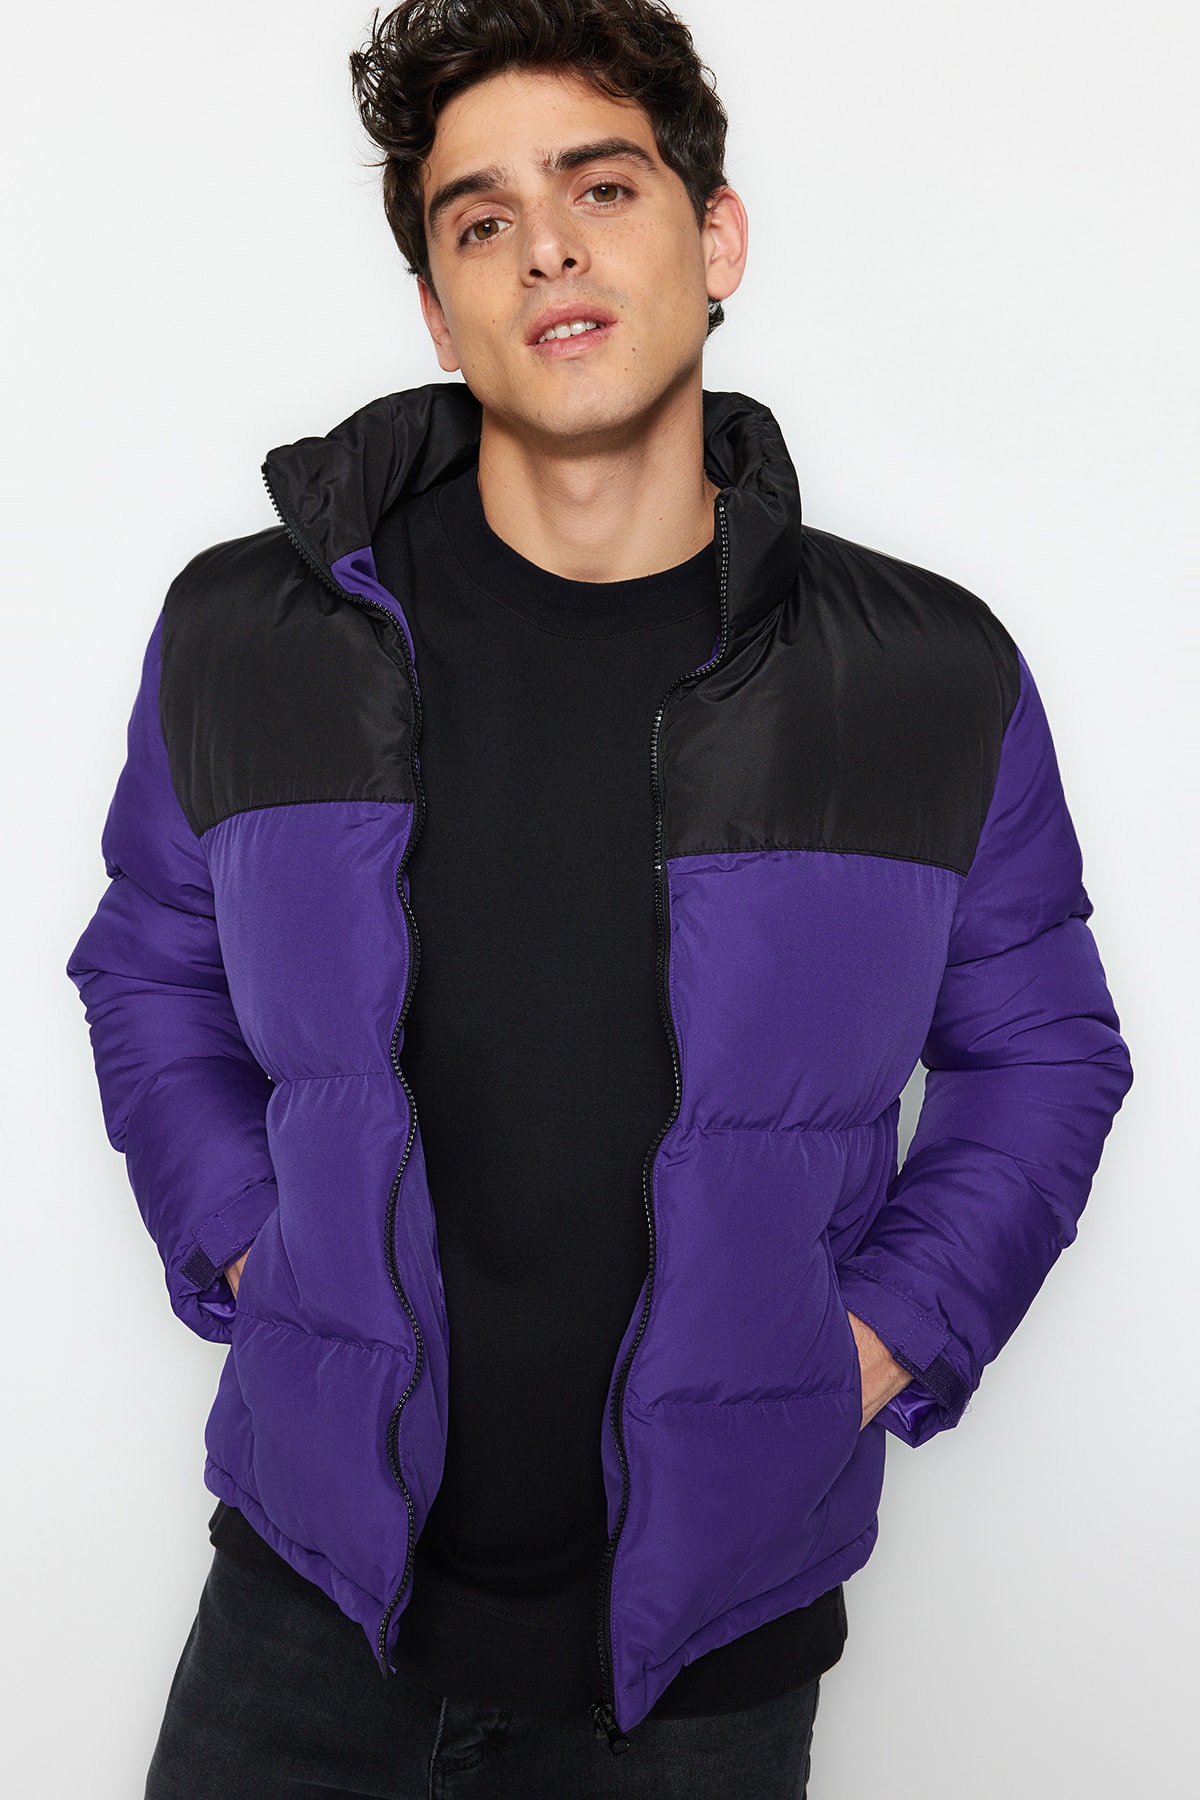 Trendyol zimná bunda - fialová - puffer